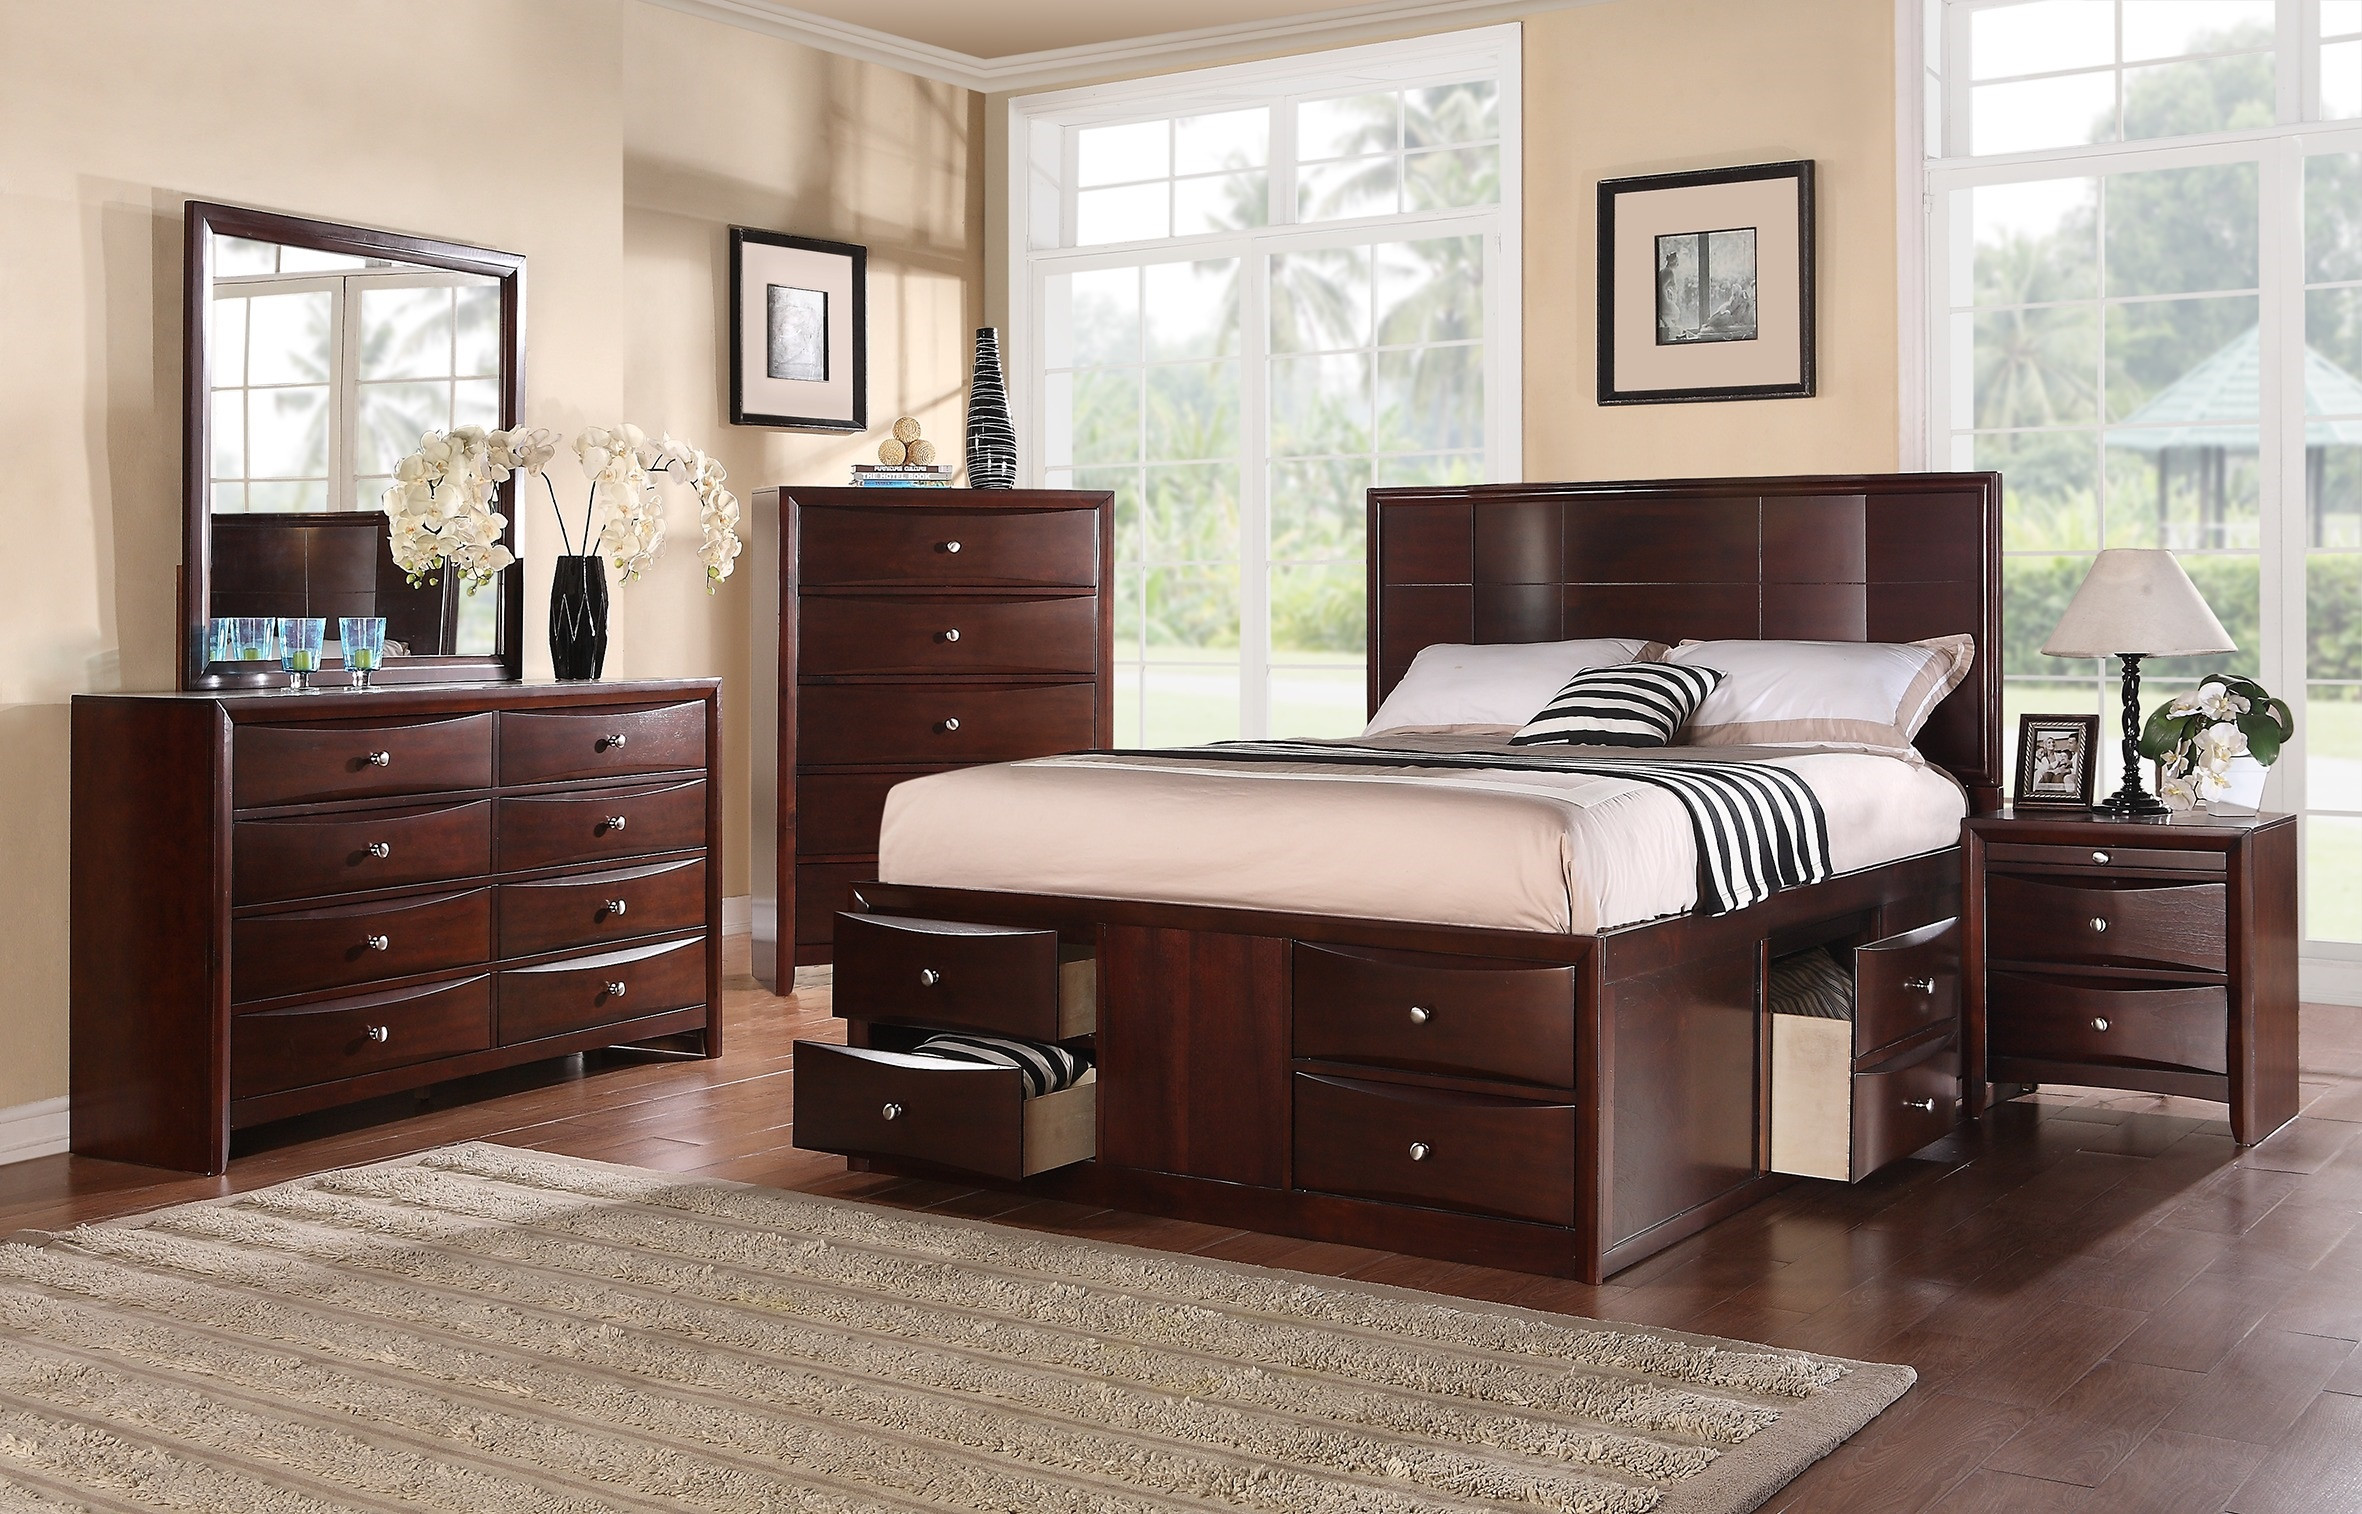 Bedroom Sets With Storage
 Elegant innovative Bedroom Furniture Storage Drawers FB